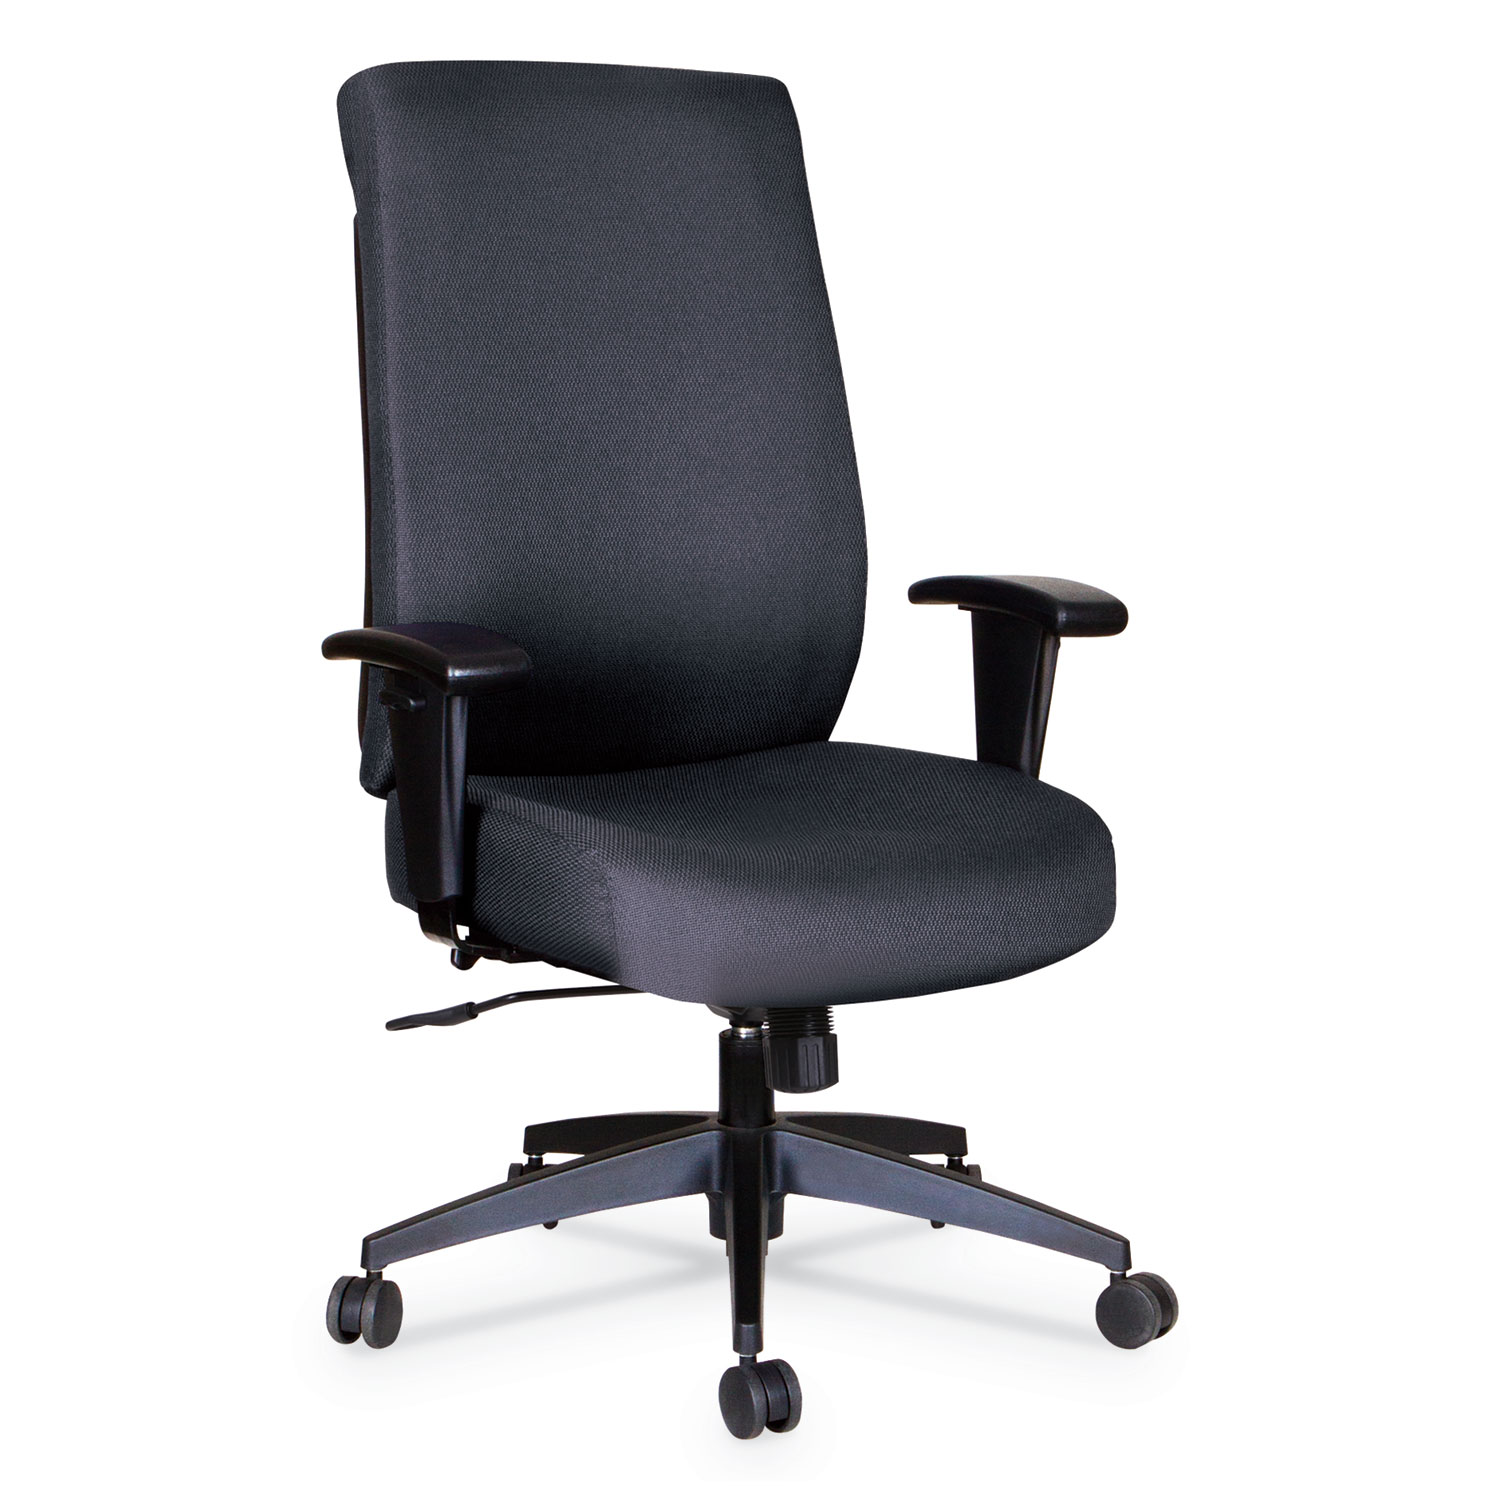  Alera ALEHPS4101 Alera Wrigley Series High Performance High-Back Synchro-Tilt Task Chair, Up to 275 lbs., Black Seat/Back, Black Base (ALEHPS4101) 